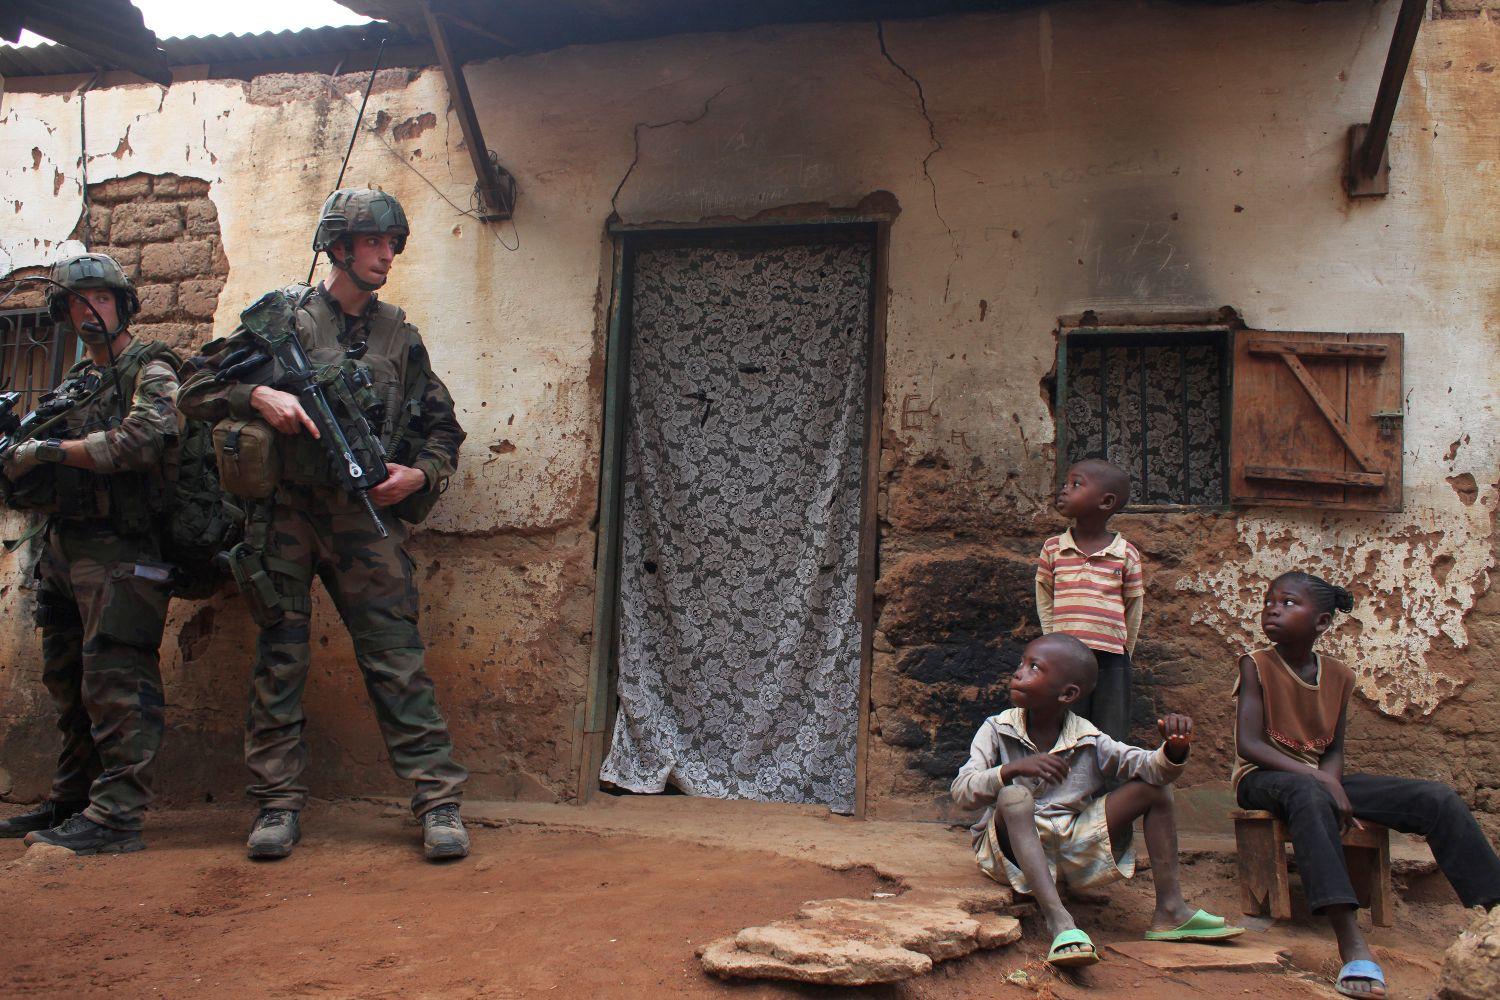 Francia katonák Banguiban 2013 decemberében